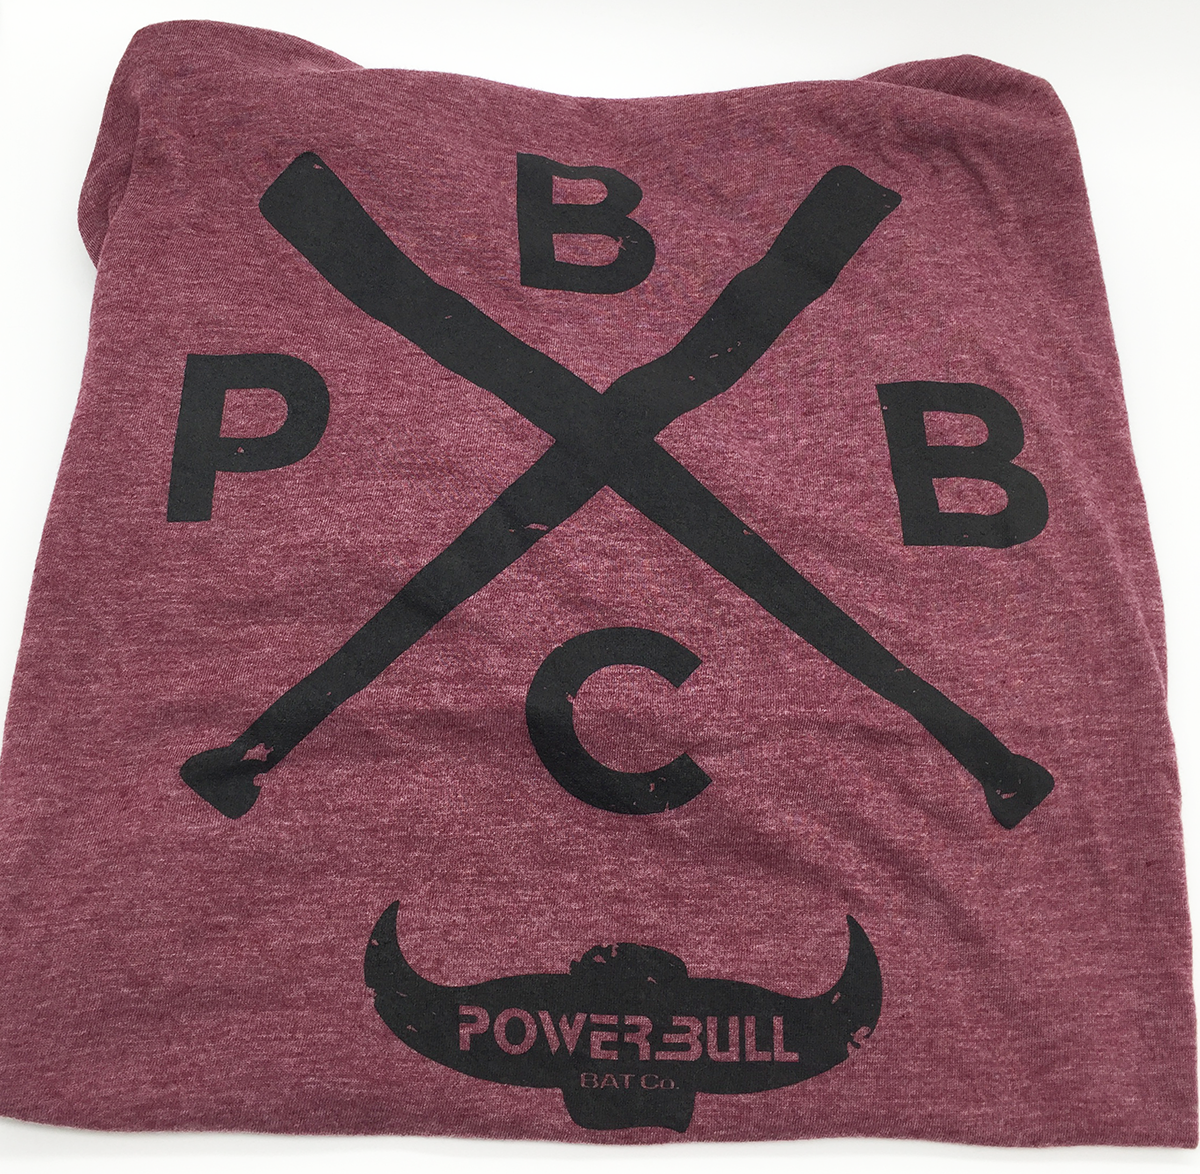 PBBC - Powerbull Bat Co. 